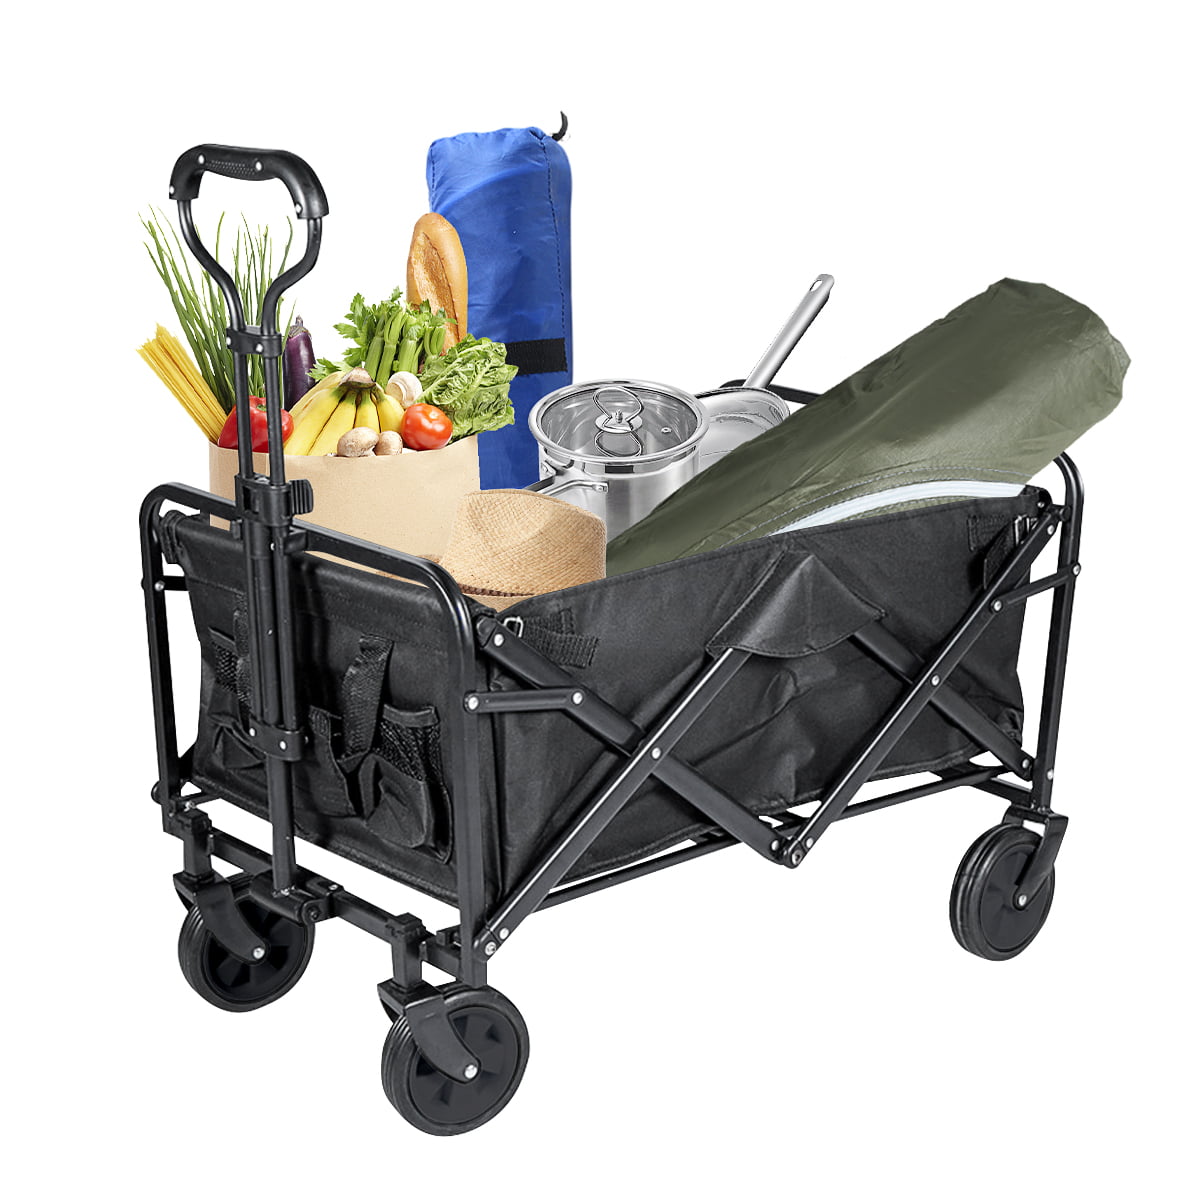 Foldable Wagon Folding Utility Cart Shopping Collapsible Garden Buggy Camping 